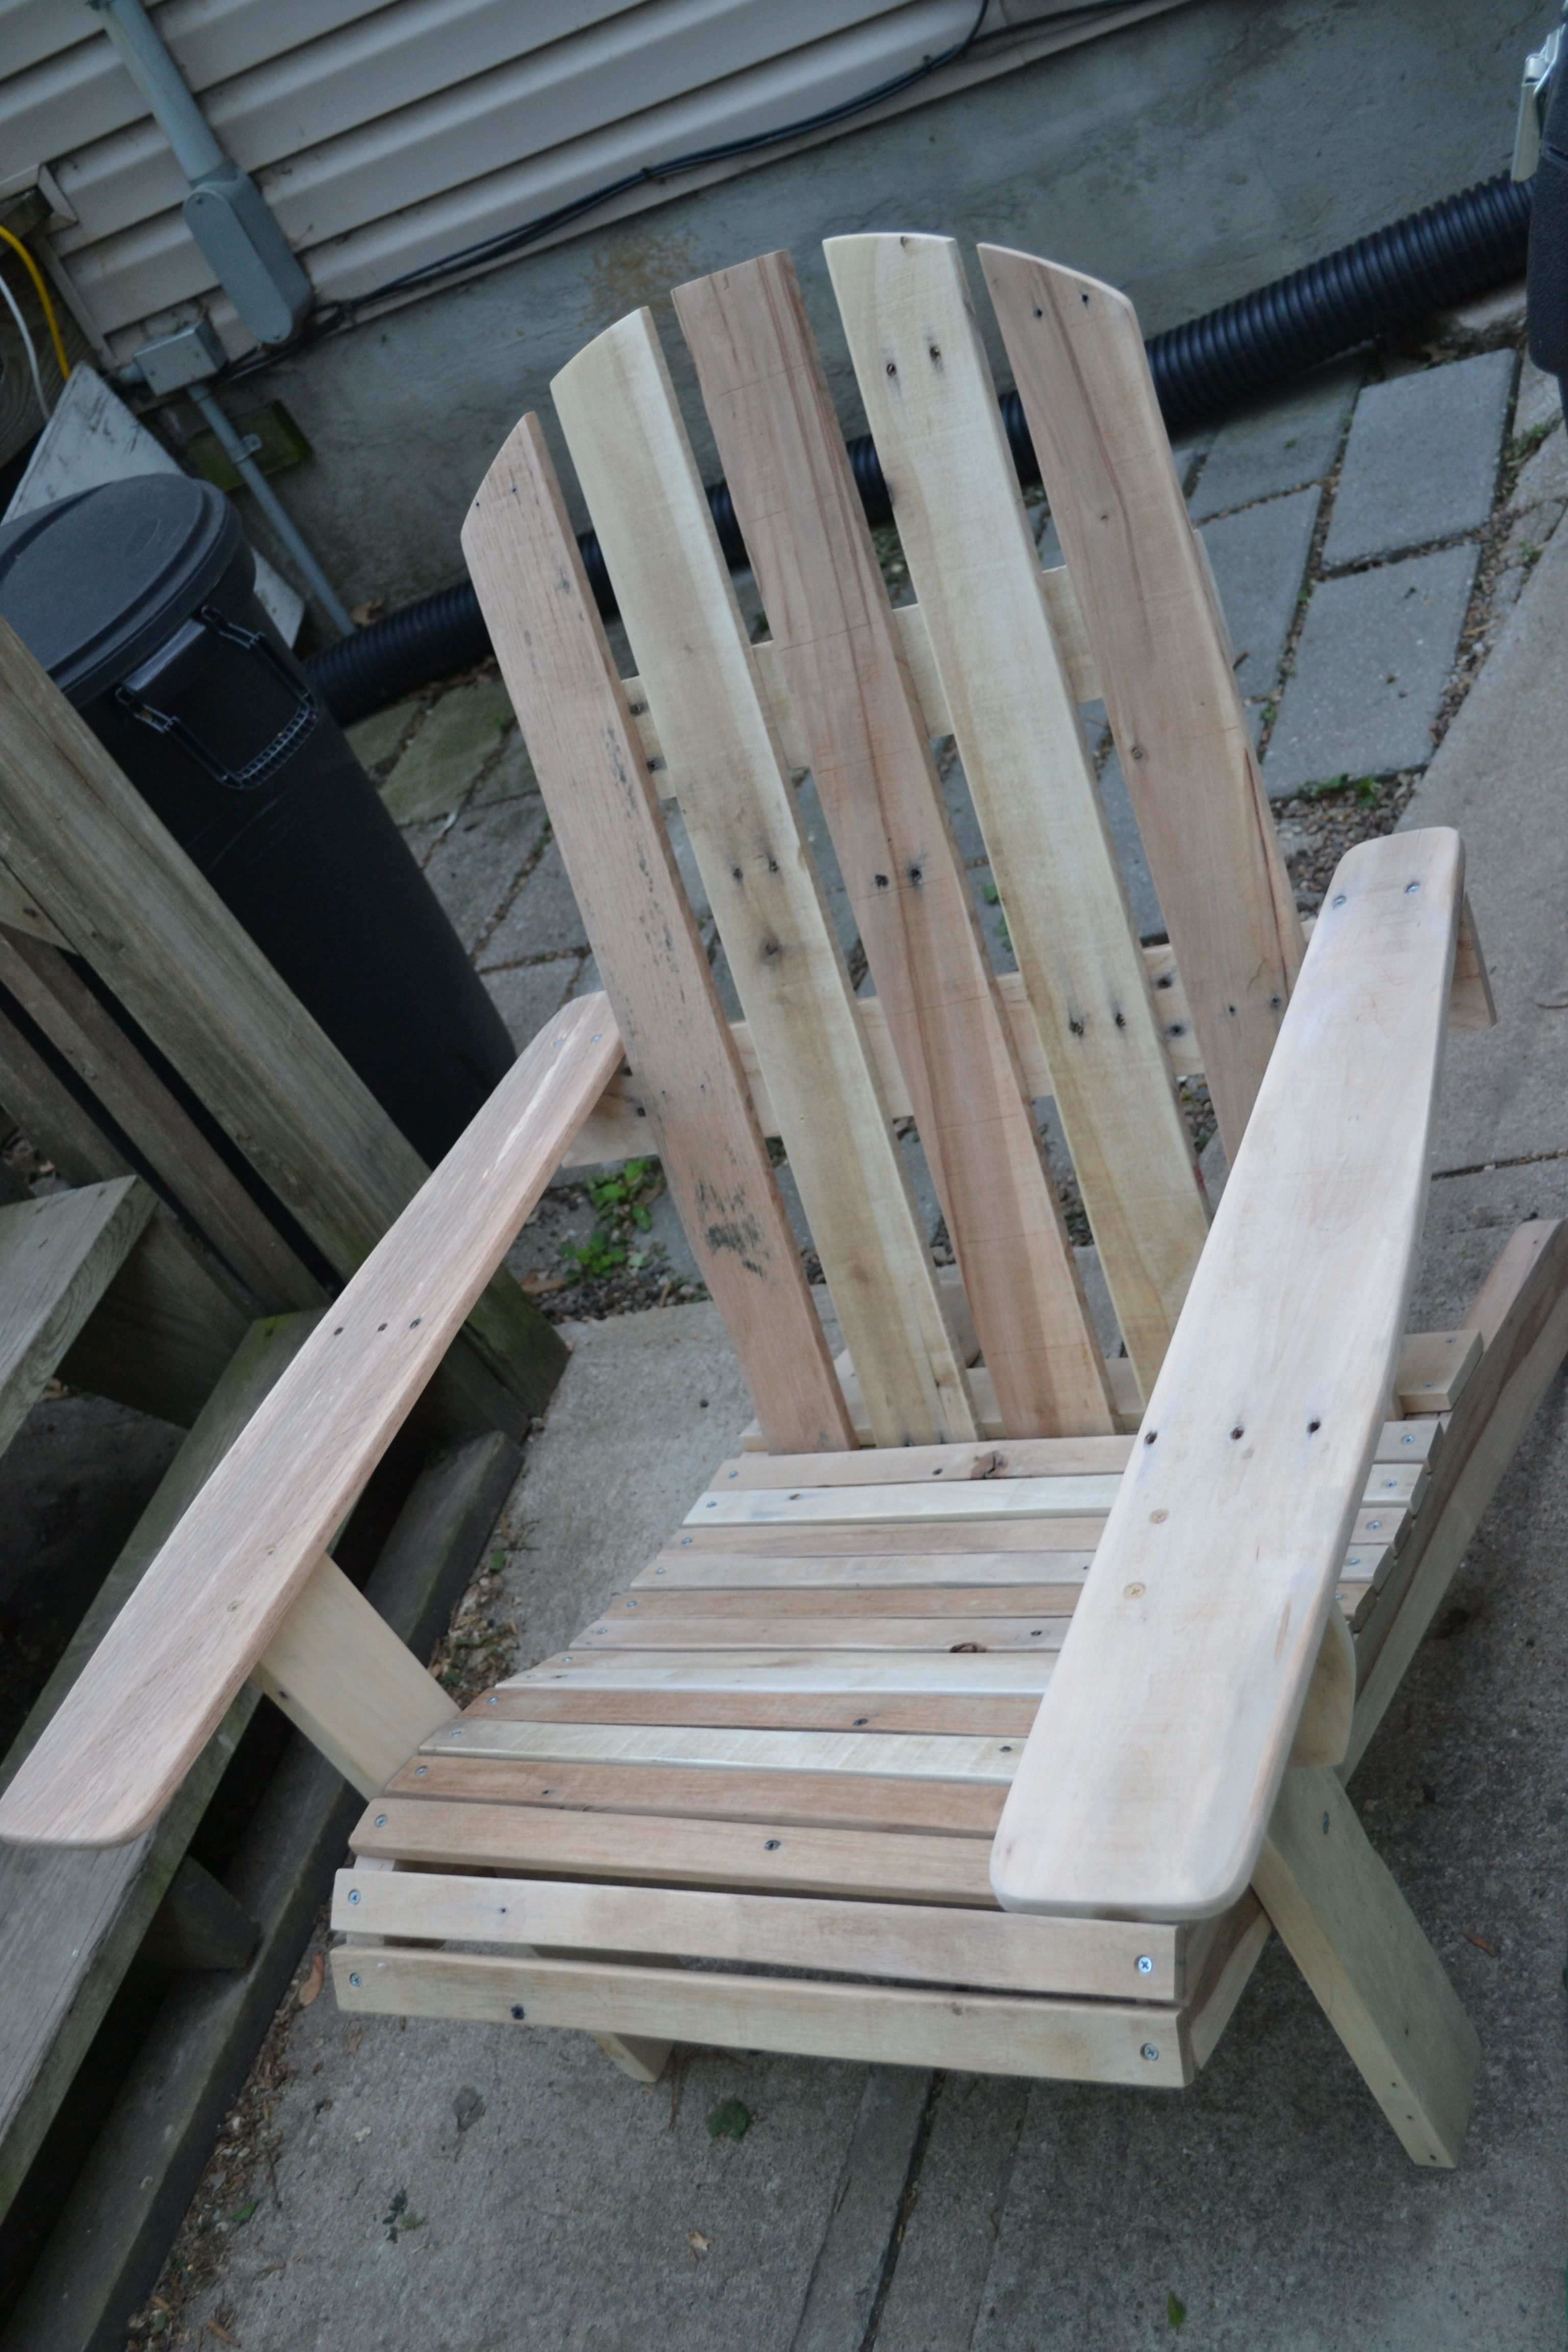 Best ideas about DIY Adirondack Chairs Plans
. Save or Pin Diy Pallet Adirondack Chair Plans Wooden PDF birdhouse Now.